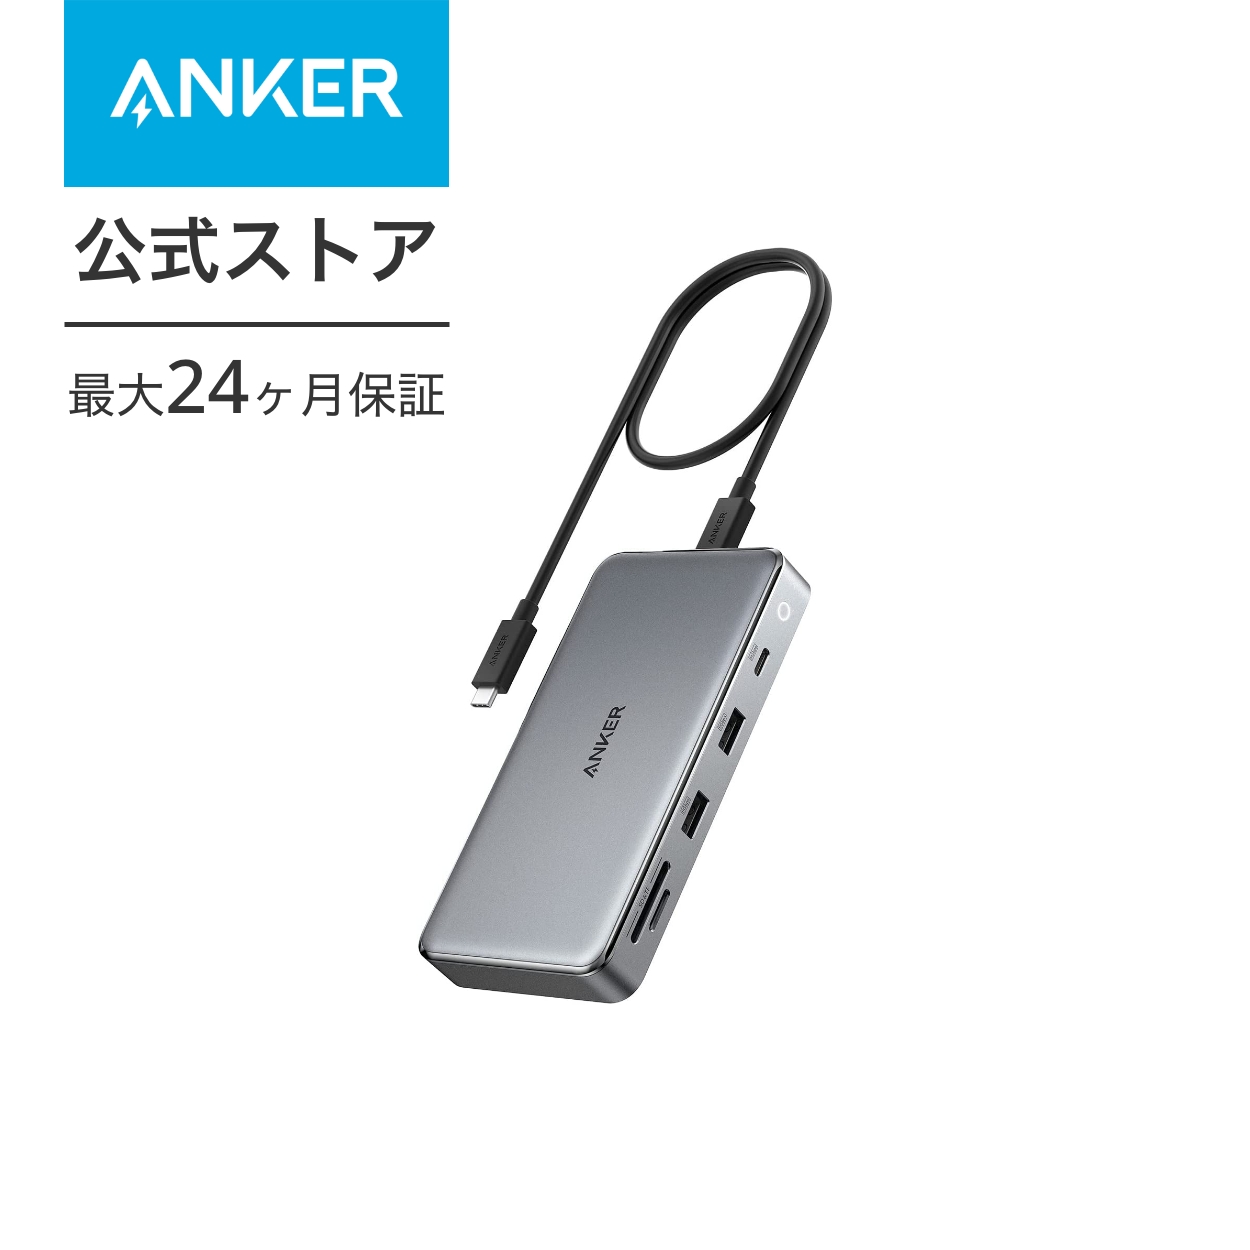 Anker 332 USB-C ハブ (5-in-1, 4K HDMI) 100W USB PD対応 4K HDMI